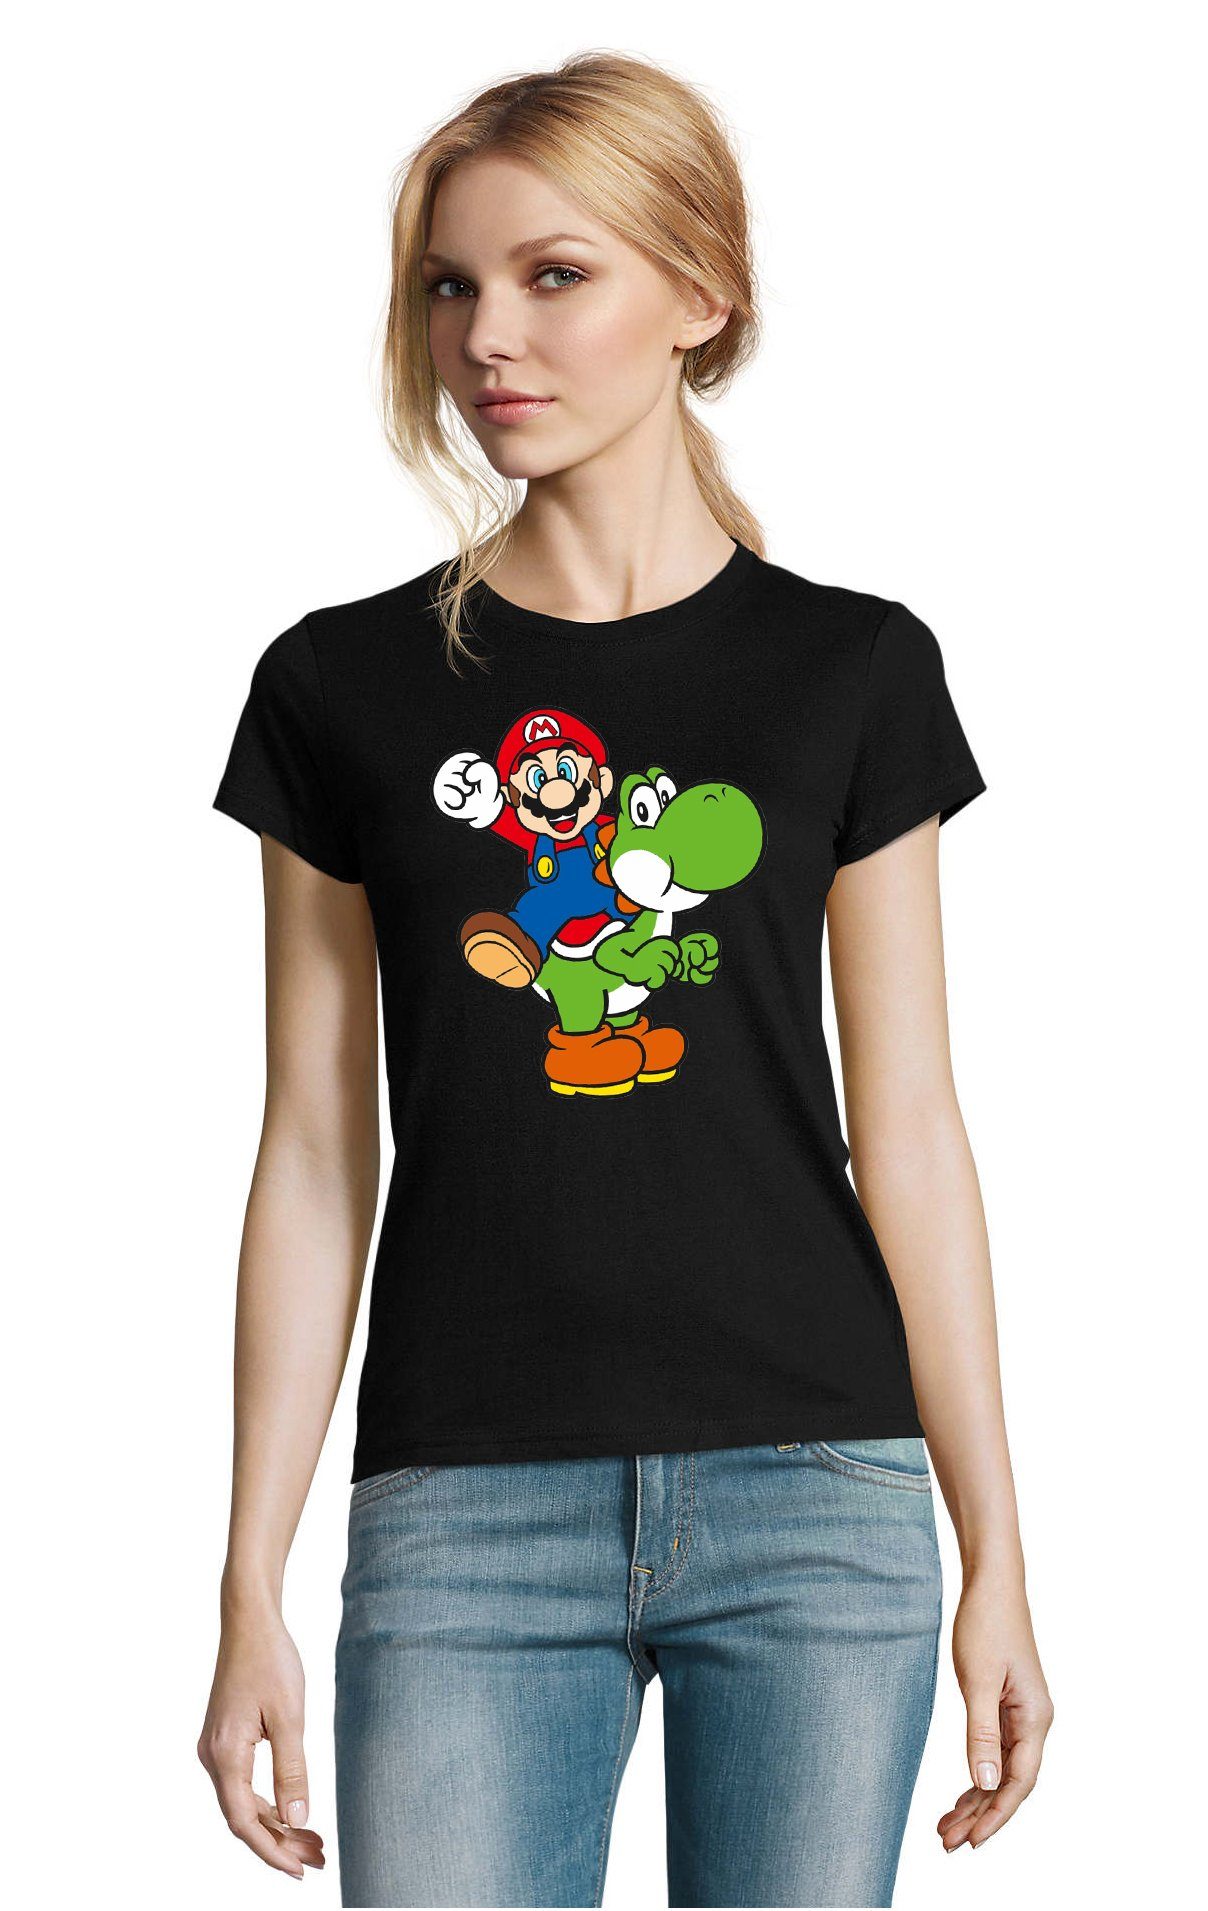 Blondie & Brownie T-Shirt Damen Yoshi & Mario Gaming Geek Konsole Super Retro